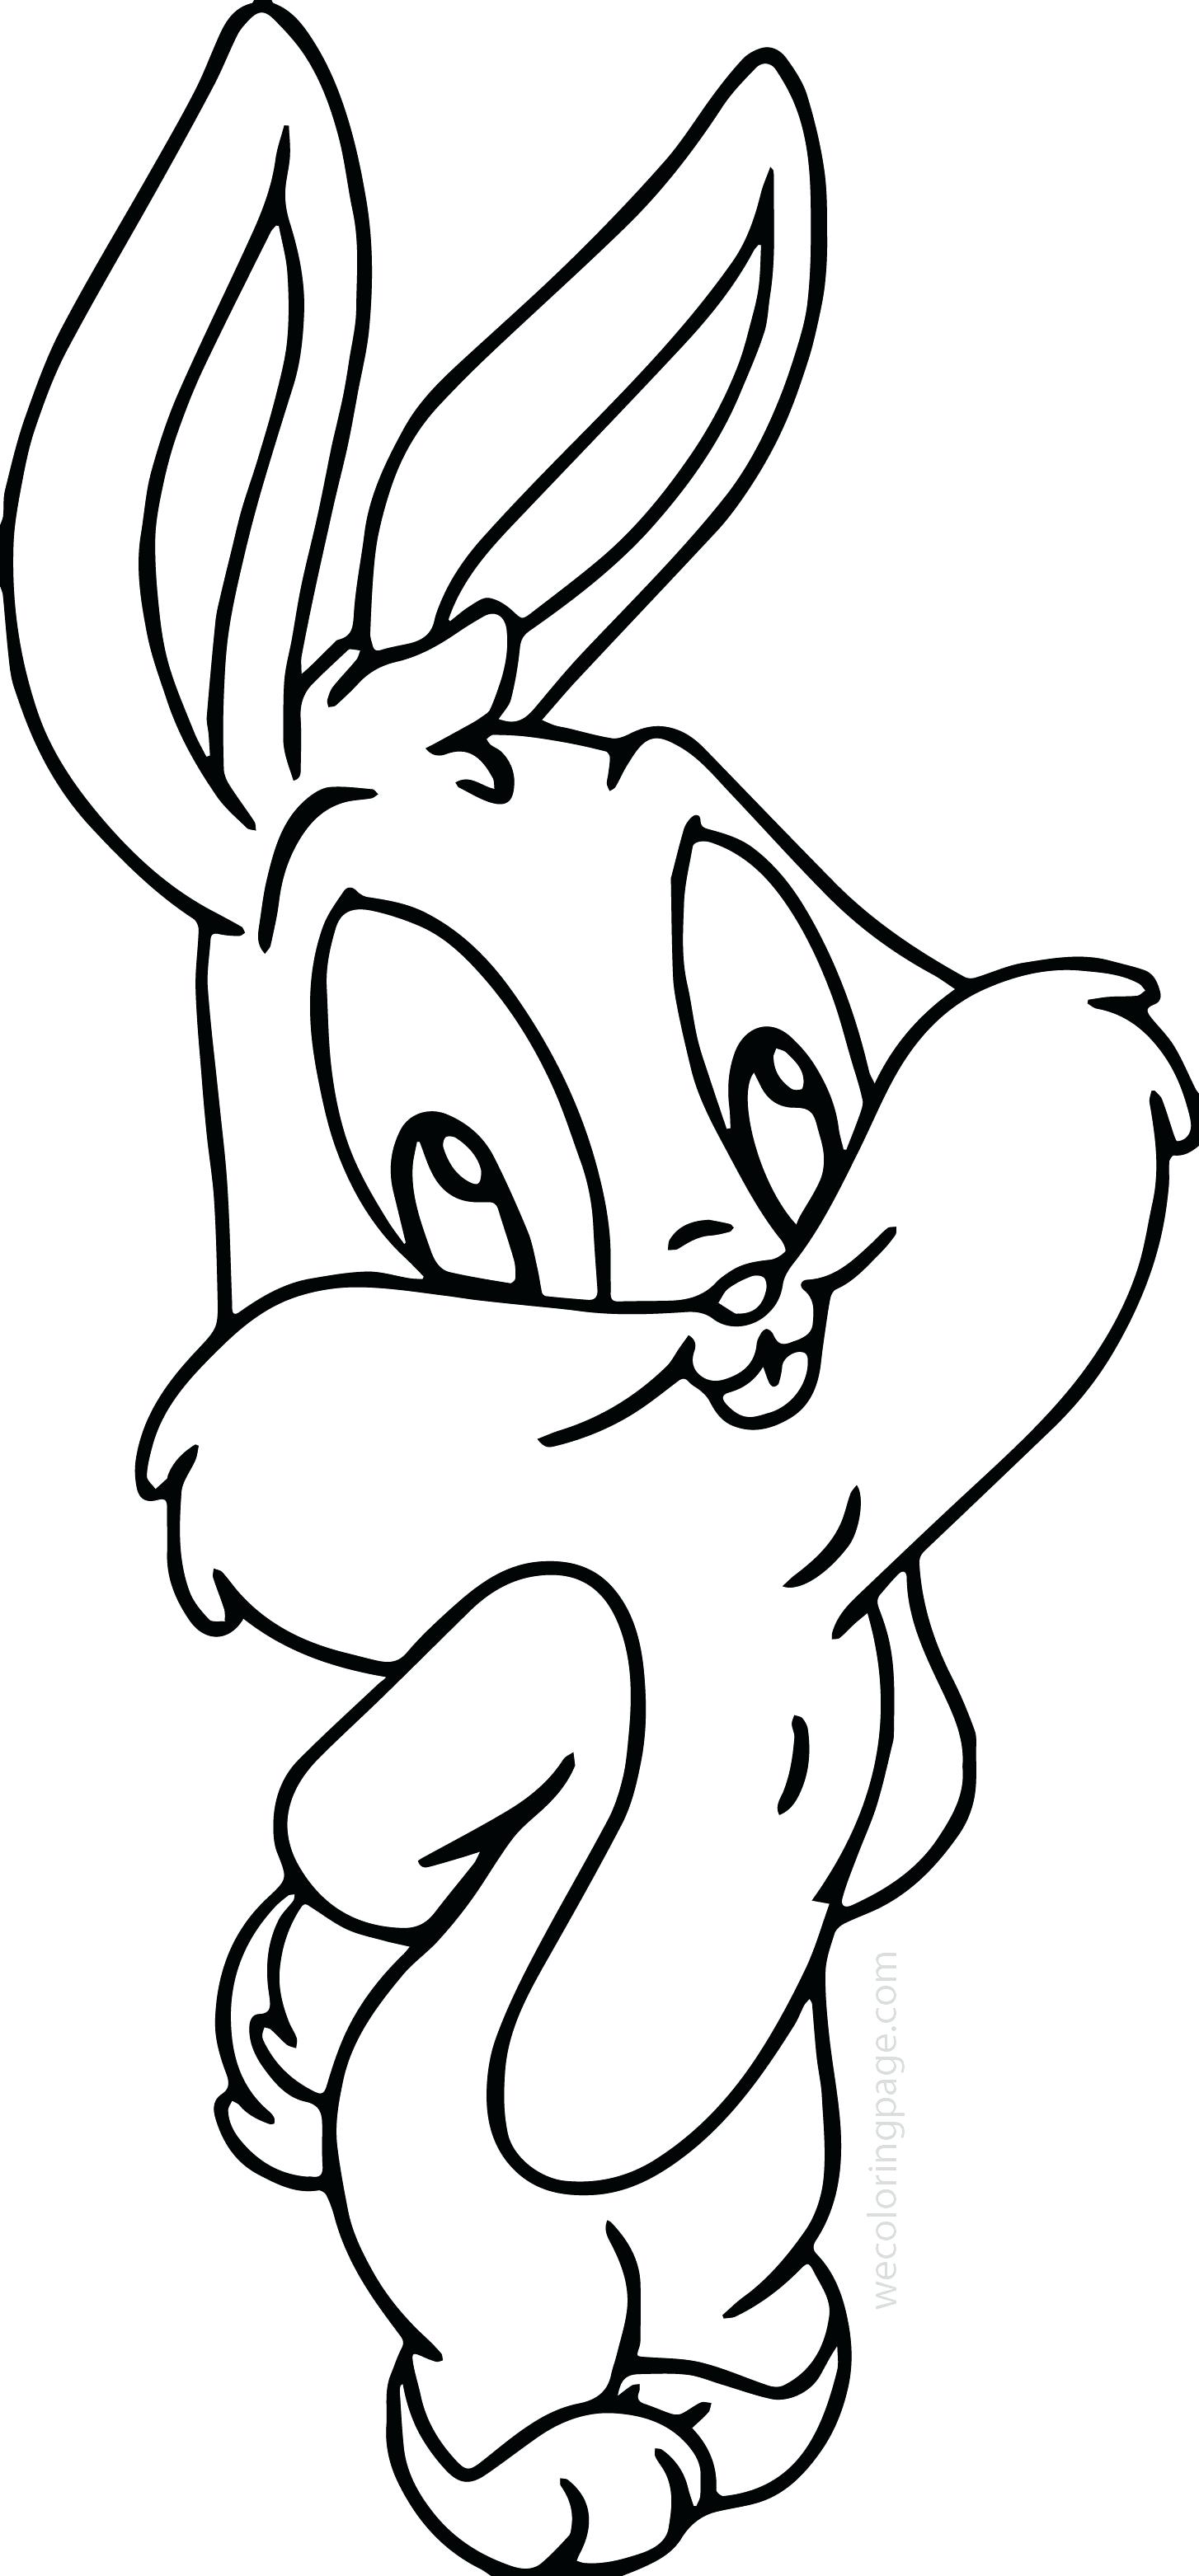 Bugs Bunny Cartoon Drawing at GetDrawings | Free download